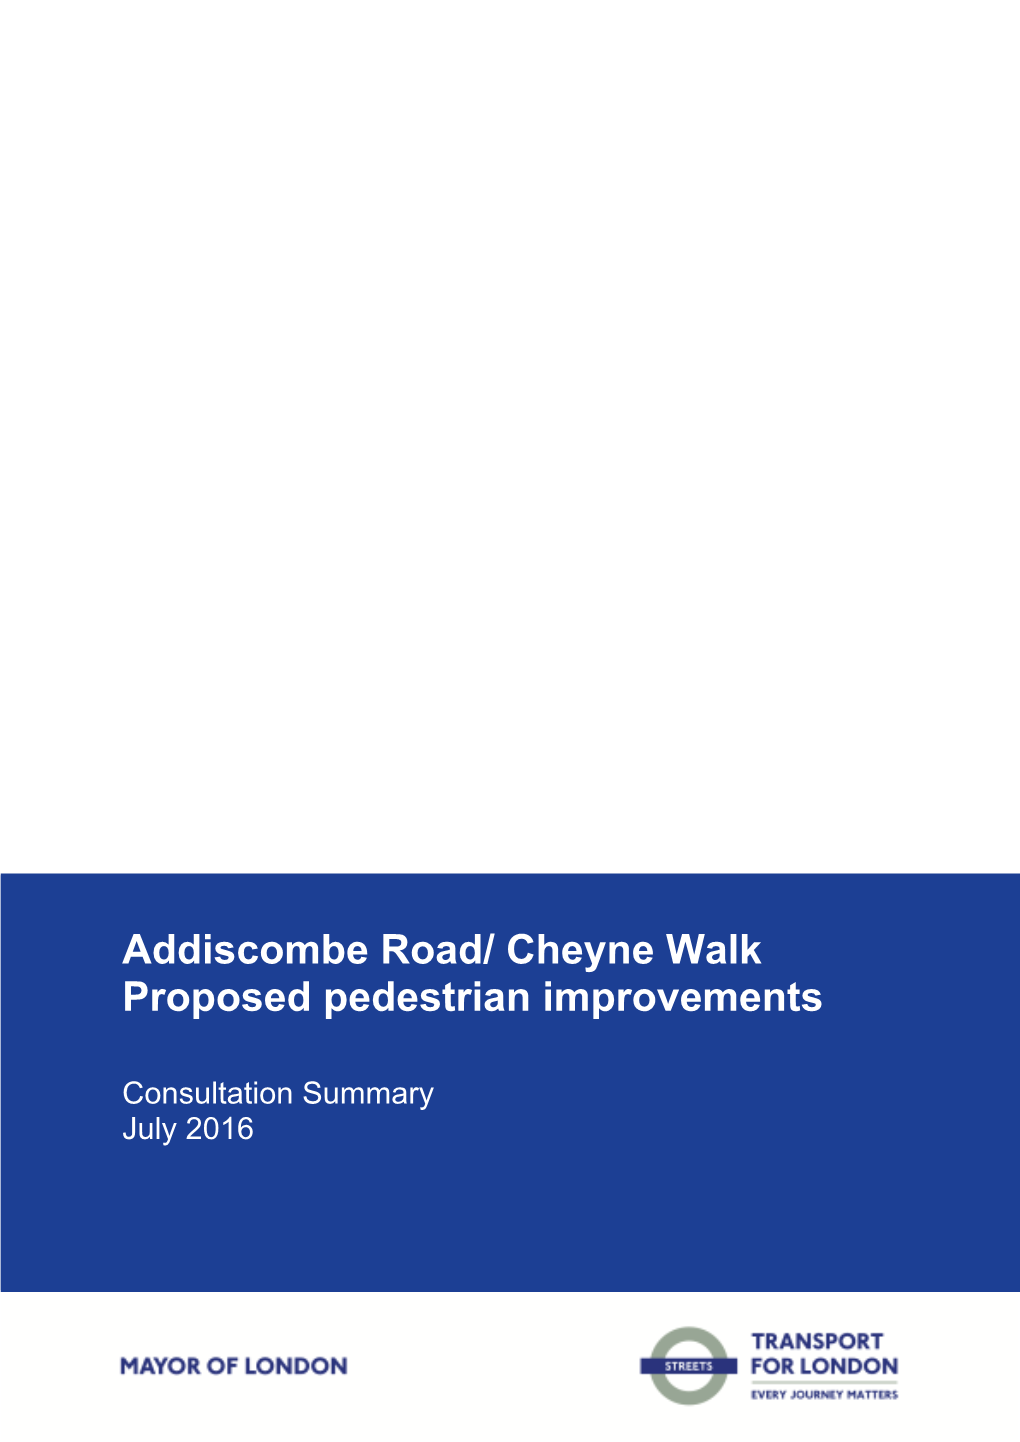 Addiscombe Road/ Cheyne Walk Proposed Pedestrian Improvements